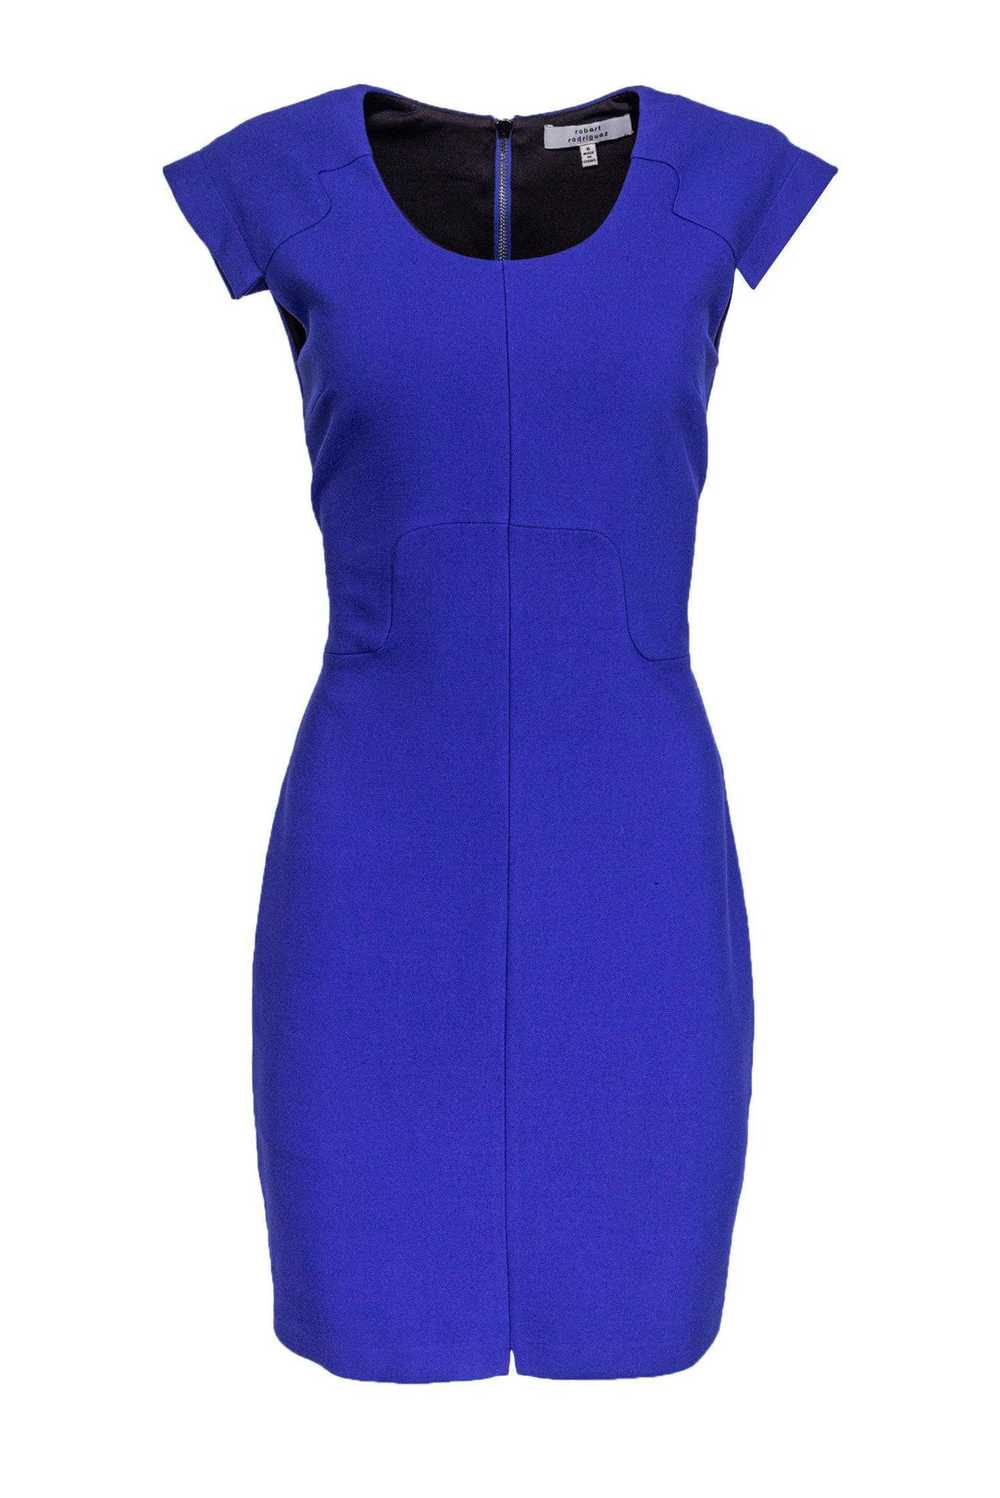 Robert Rodriguez - Blue Cap Sleeve Sheath Dress S… - image 1